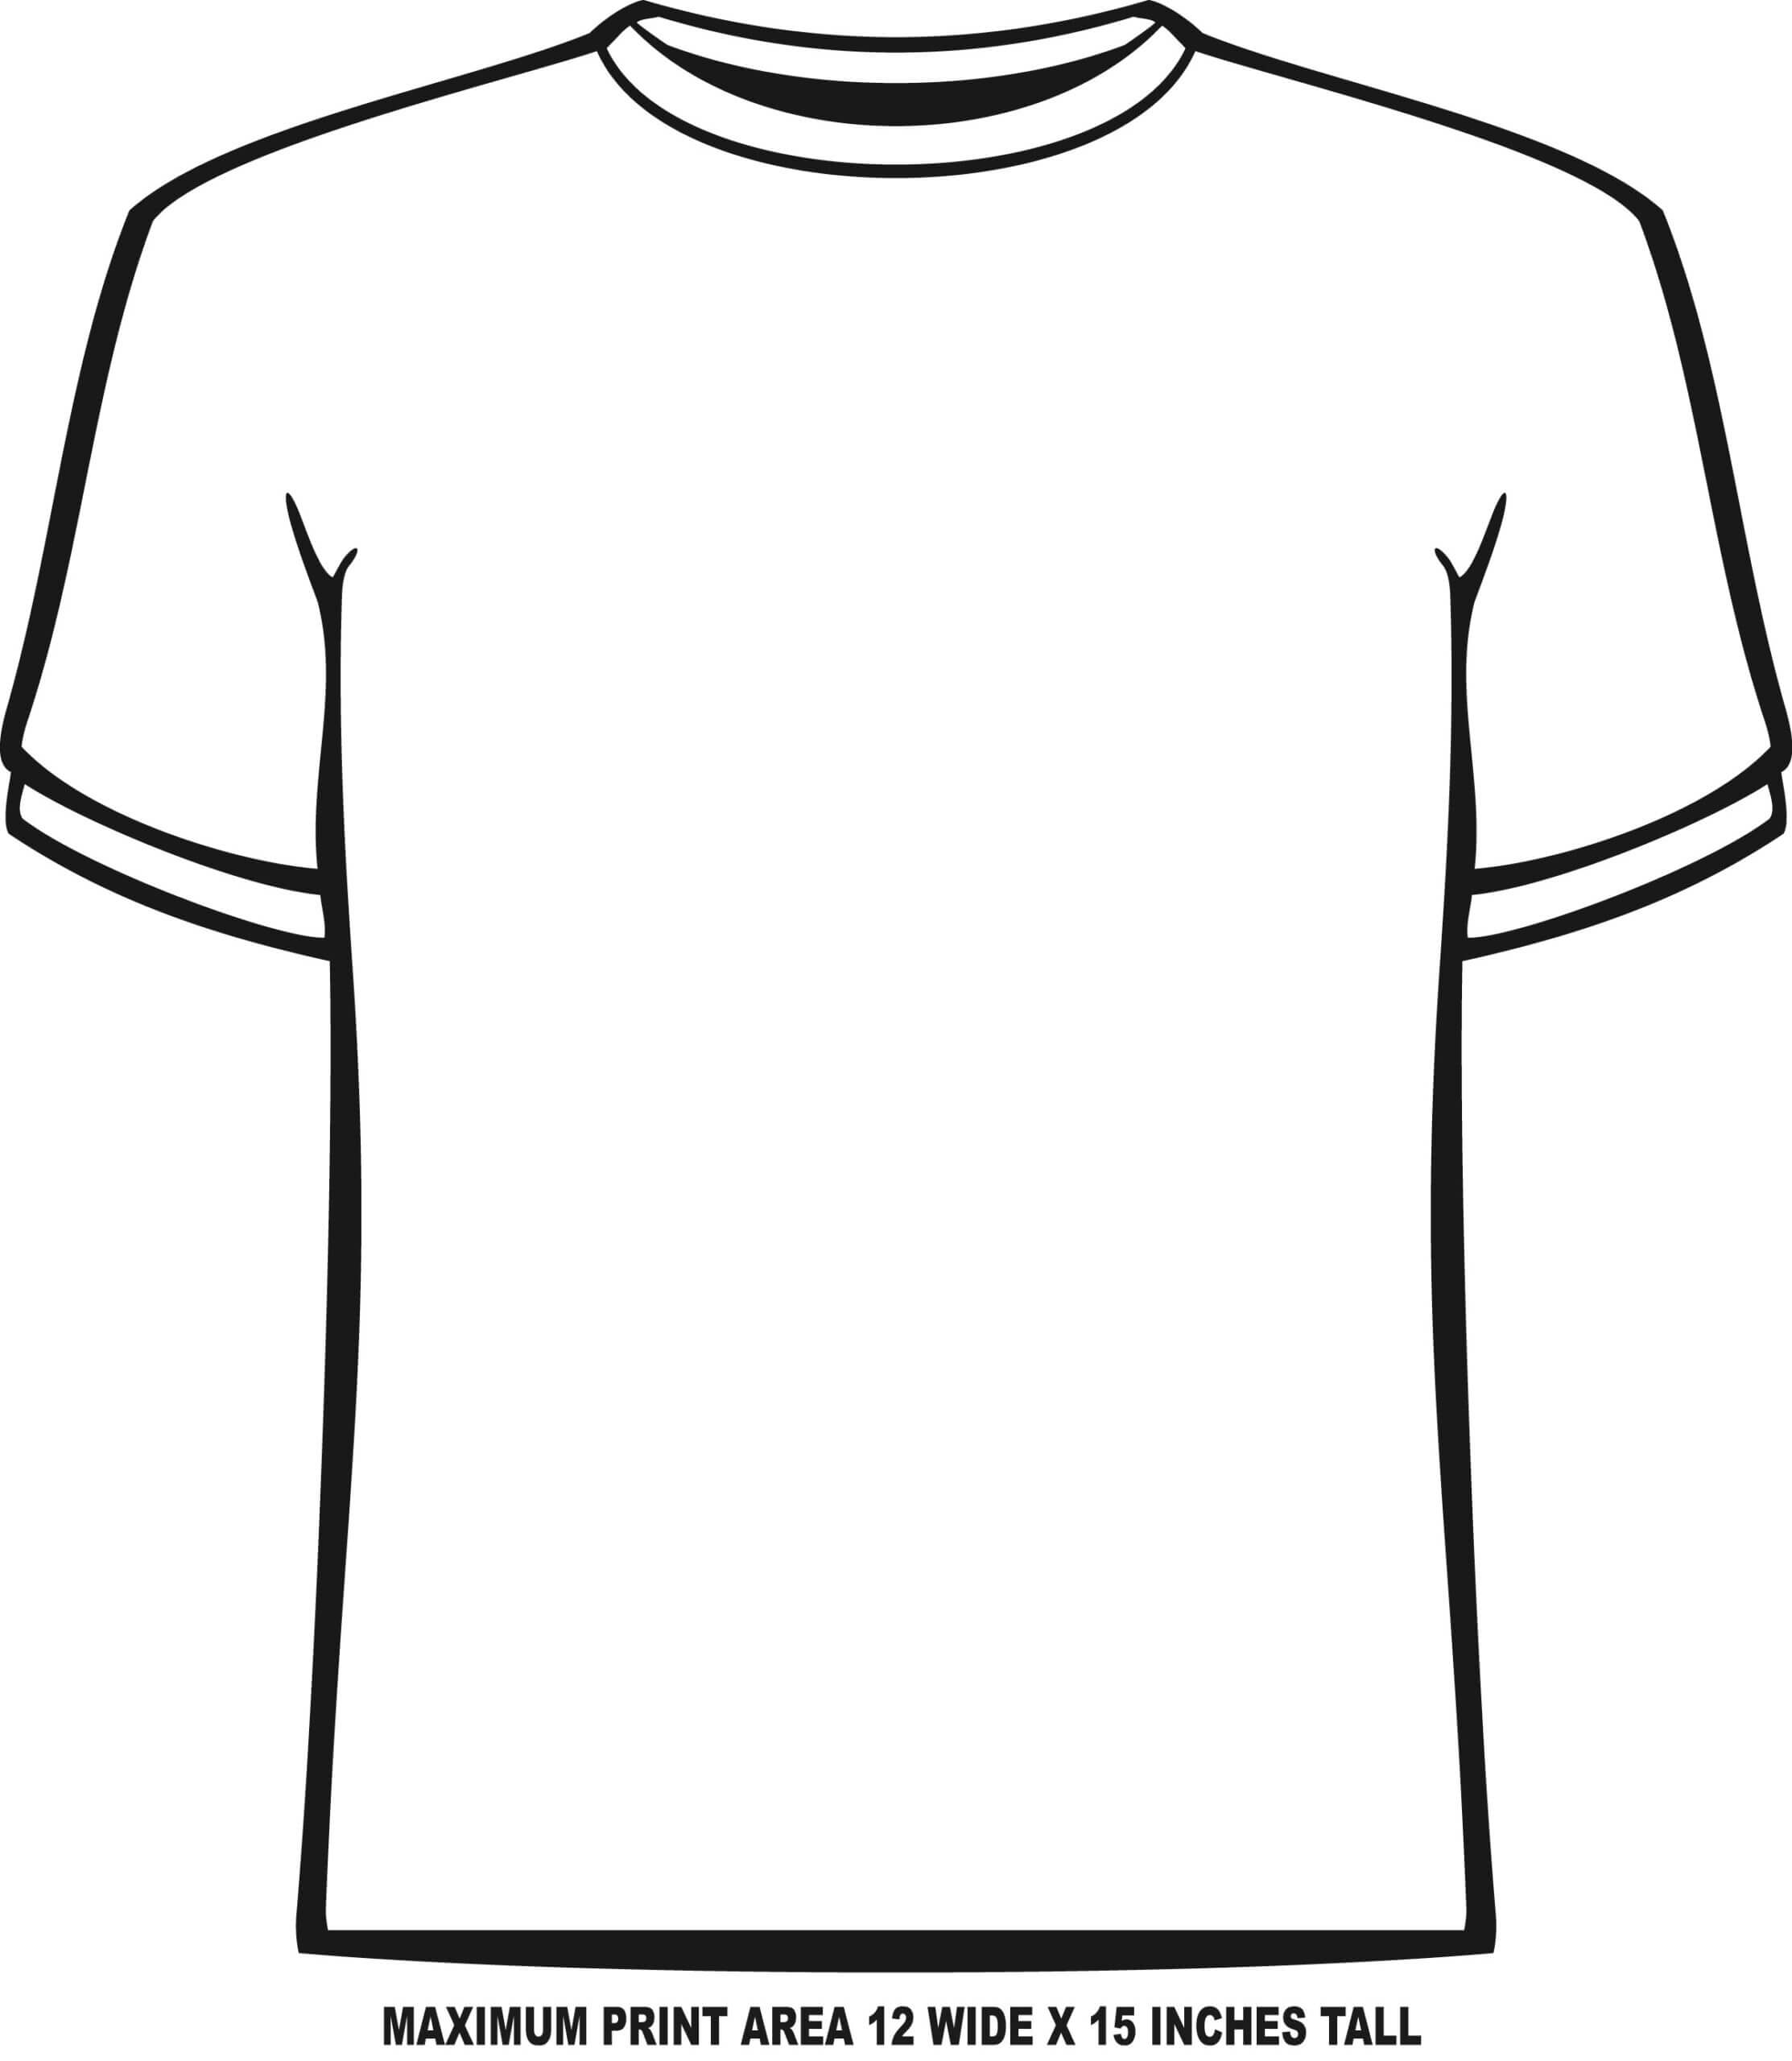 Blank Tshirt Template Pdf Dreamworks For Blank Tshirt Template Pdf Professional Template